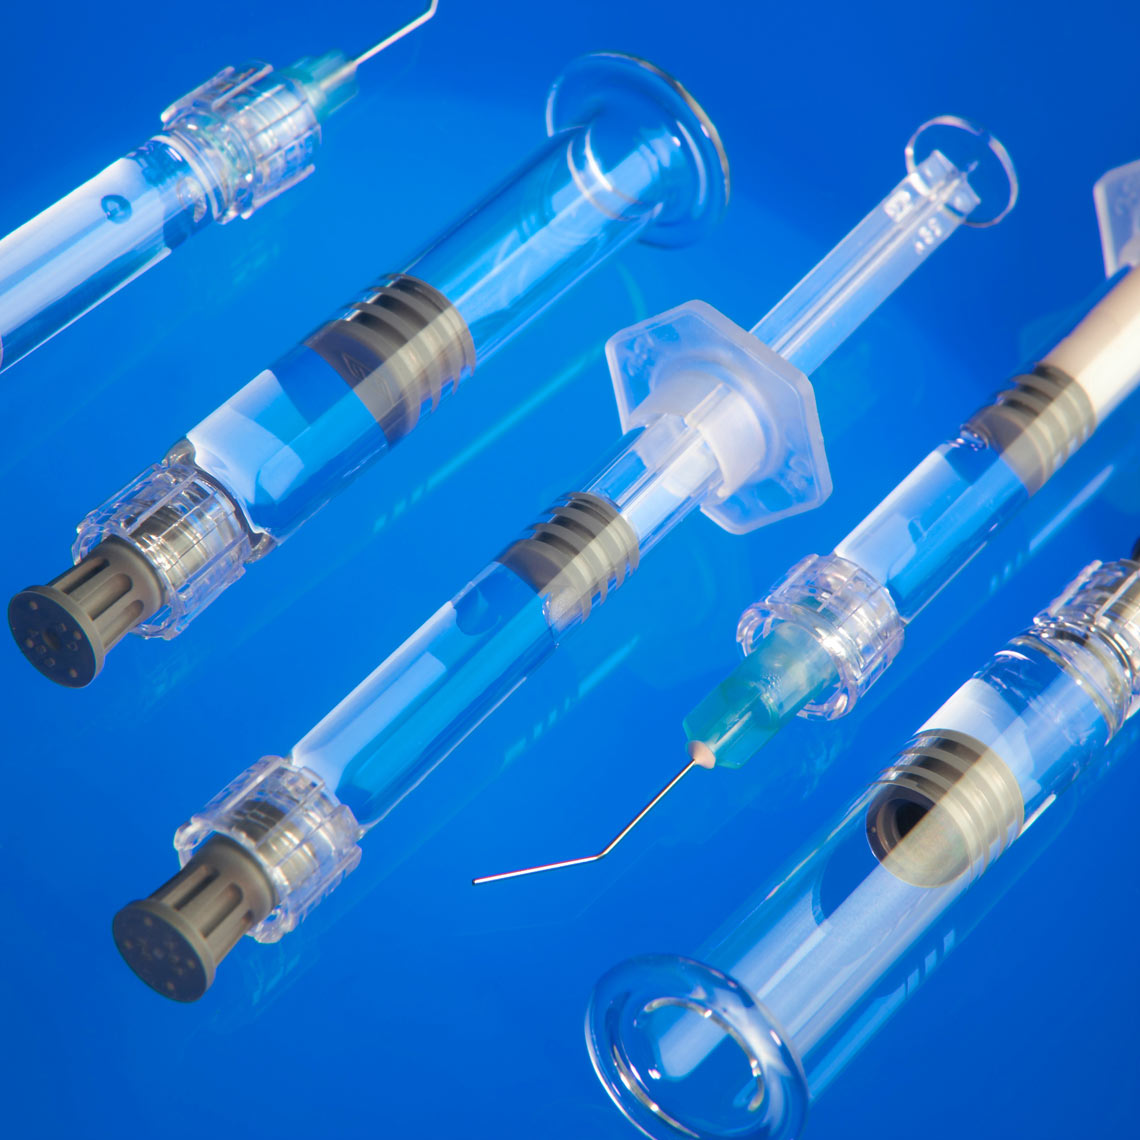 syringes/group/blue glass background/medical photography